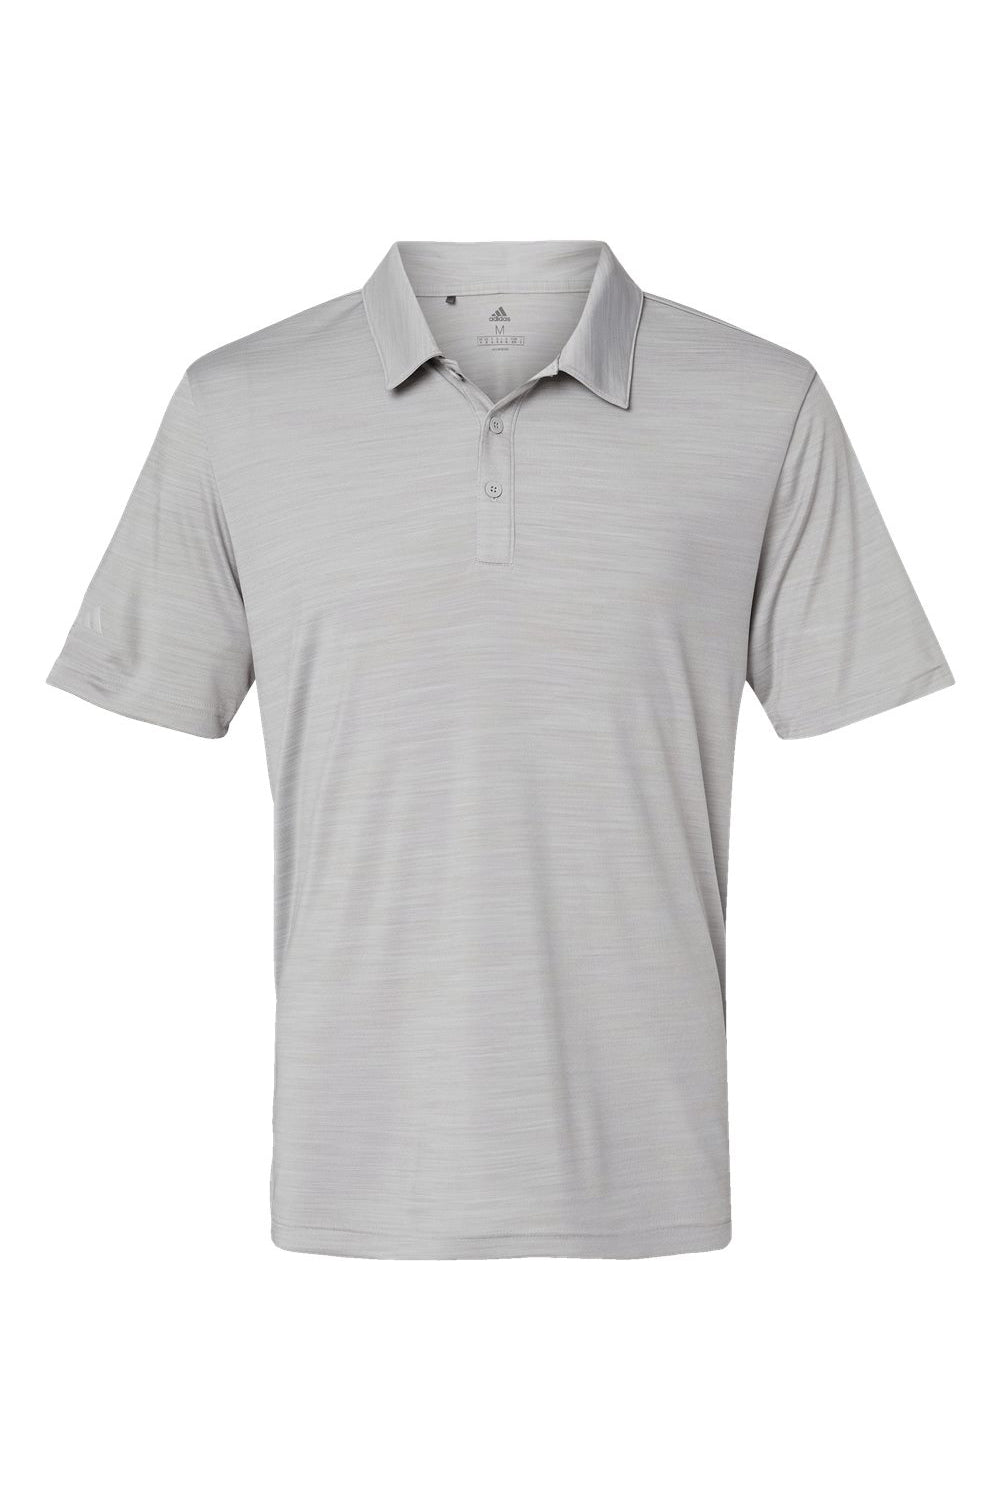 Adidas A402 Mens Melange Short Sleeve Polo Shirt Mid Grey Melange Flat Front